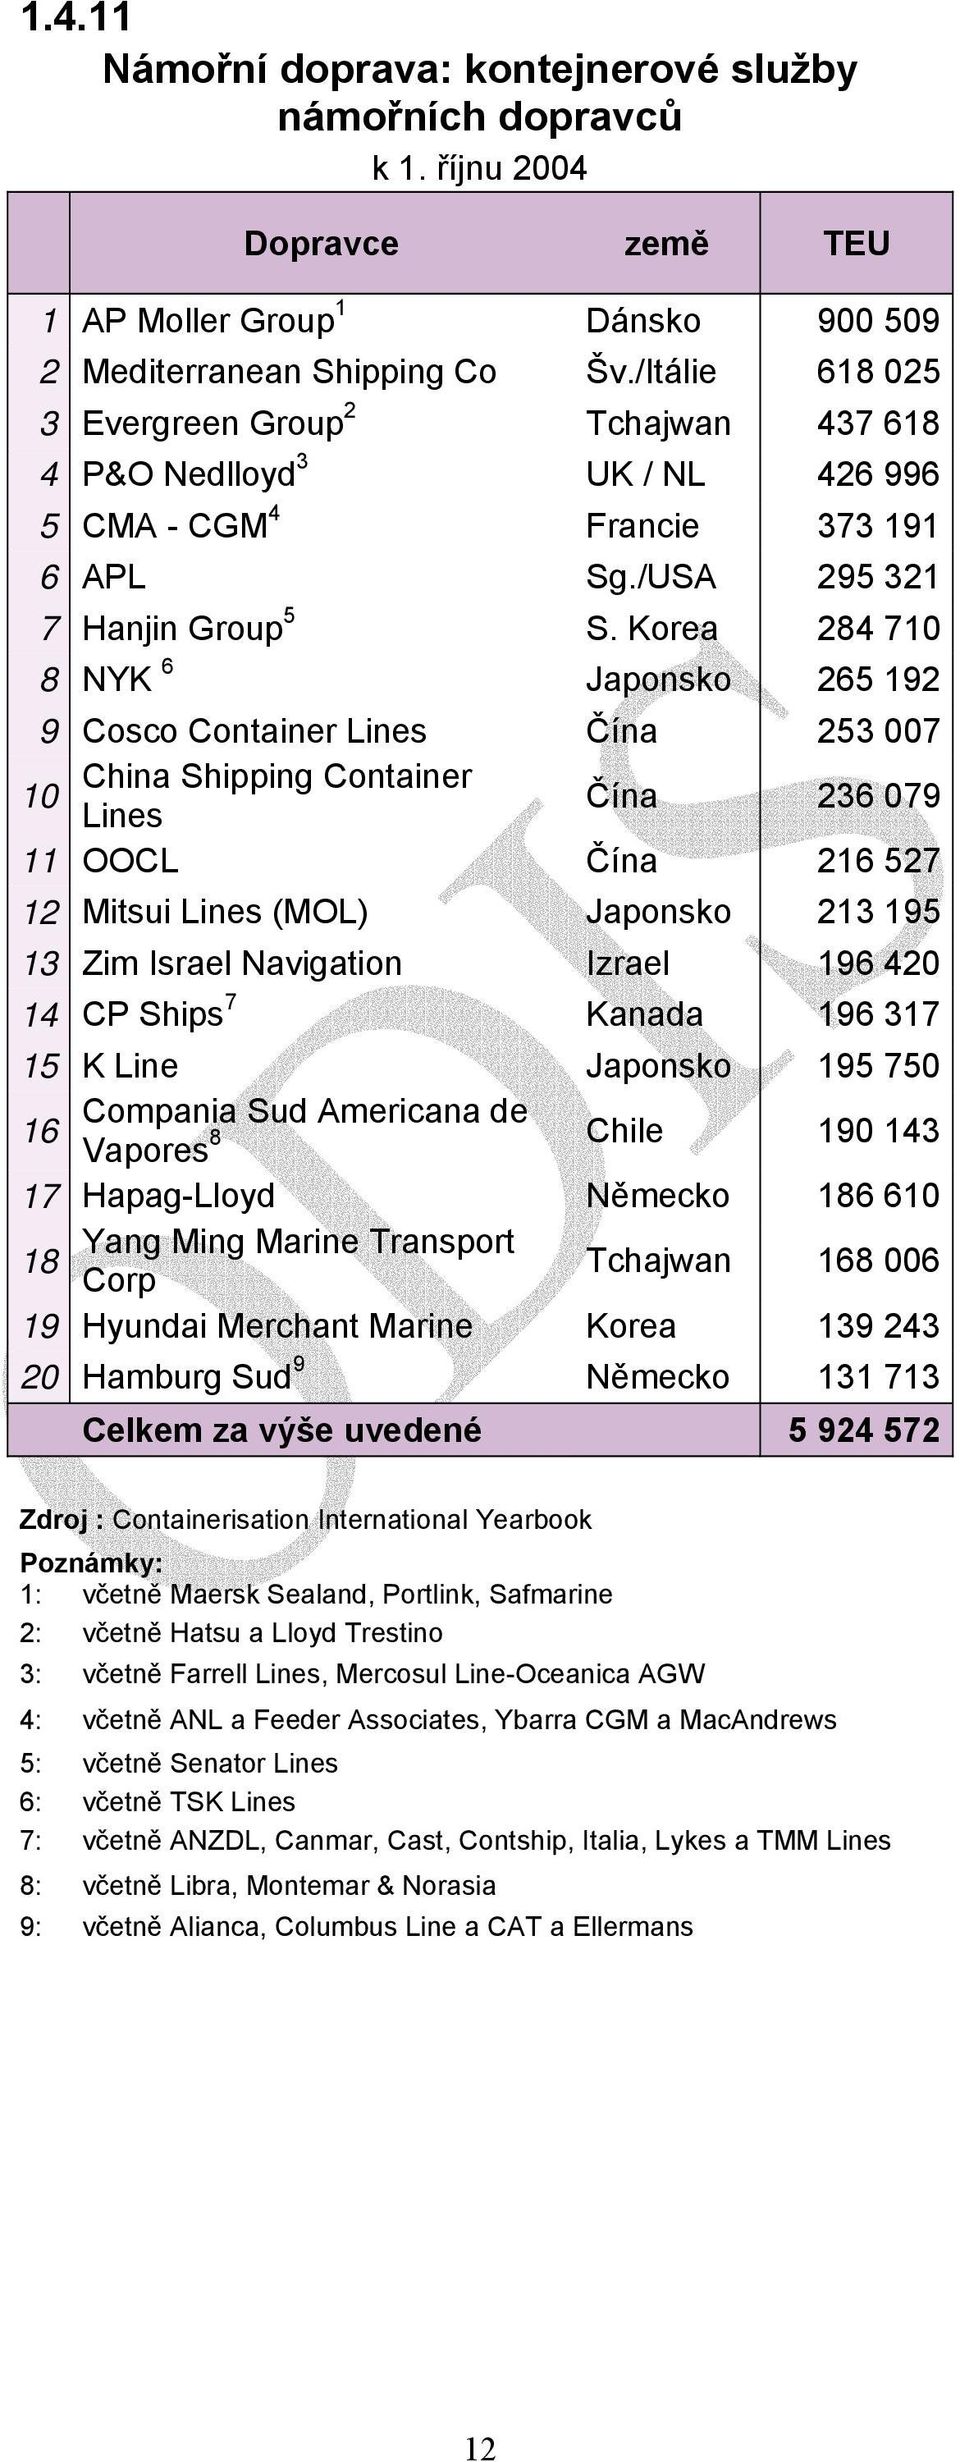 Korea 284 710 8 NYK 6 Japonsko 265 192 9 Cosco Container Lines Čína 253 007 China Shipping Container 10 Lines Čína 236 079 11 OOCL Čína 216 527 12 Mitsui Lines (MOL) Japonsko 213 195 13 Zim Israel